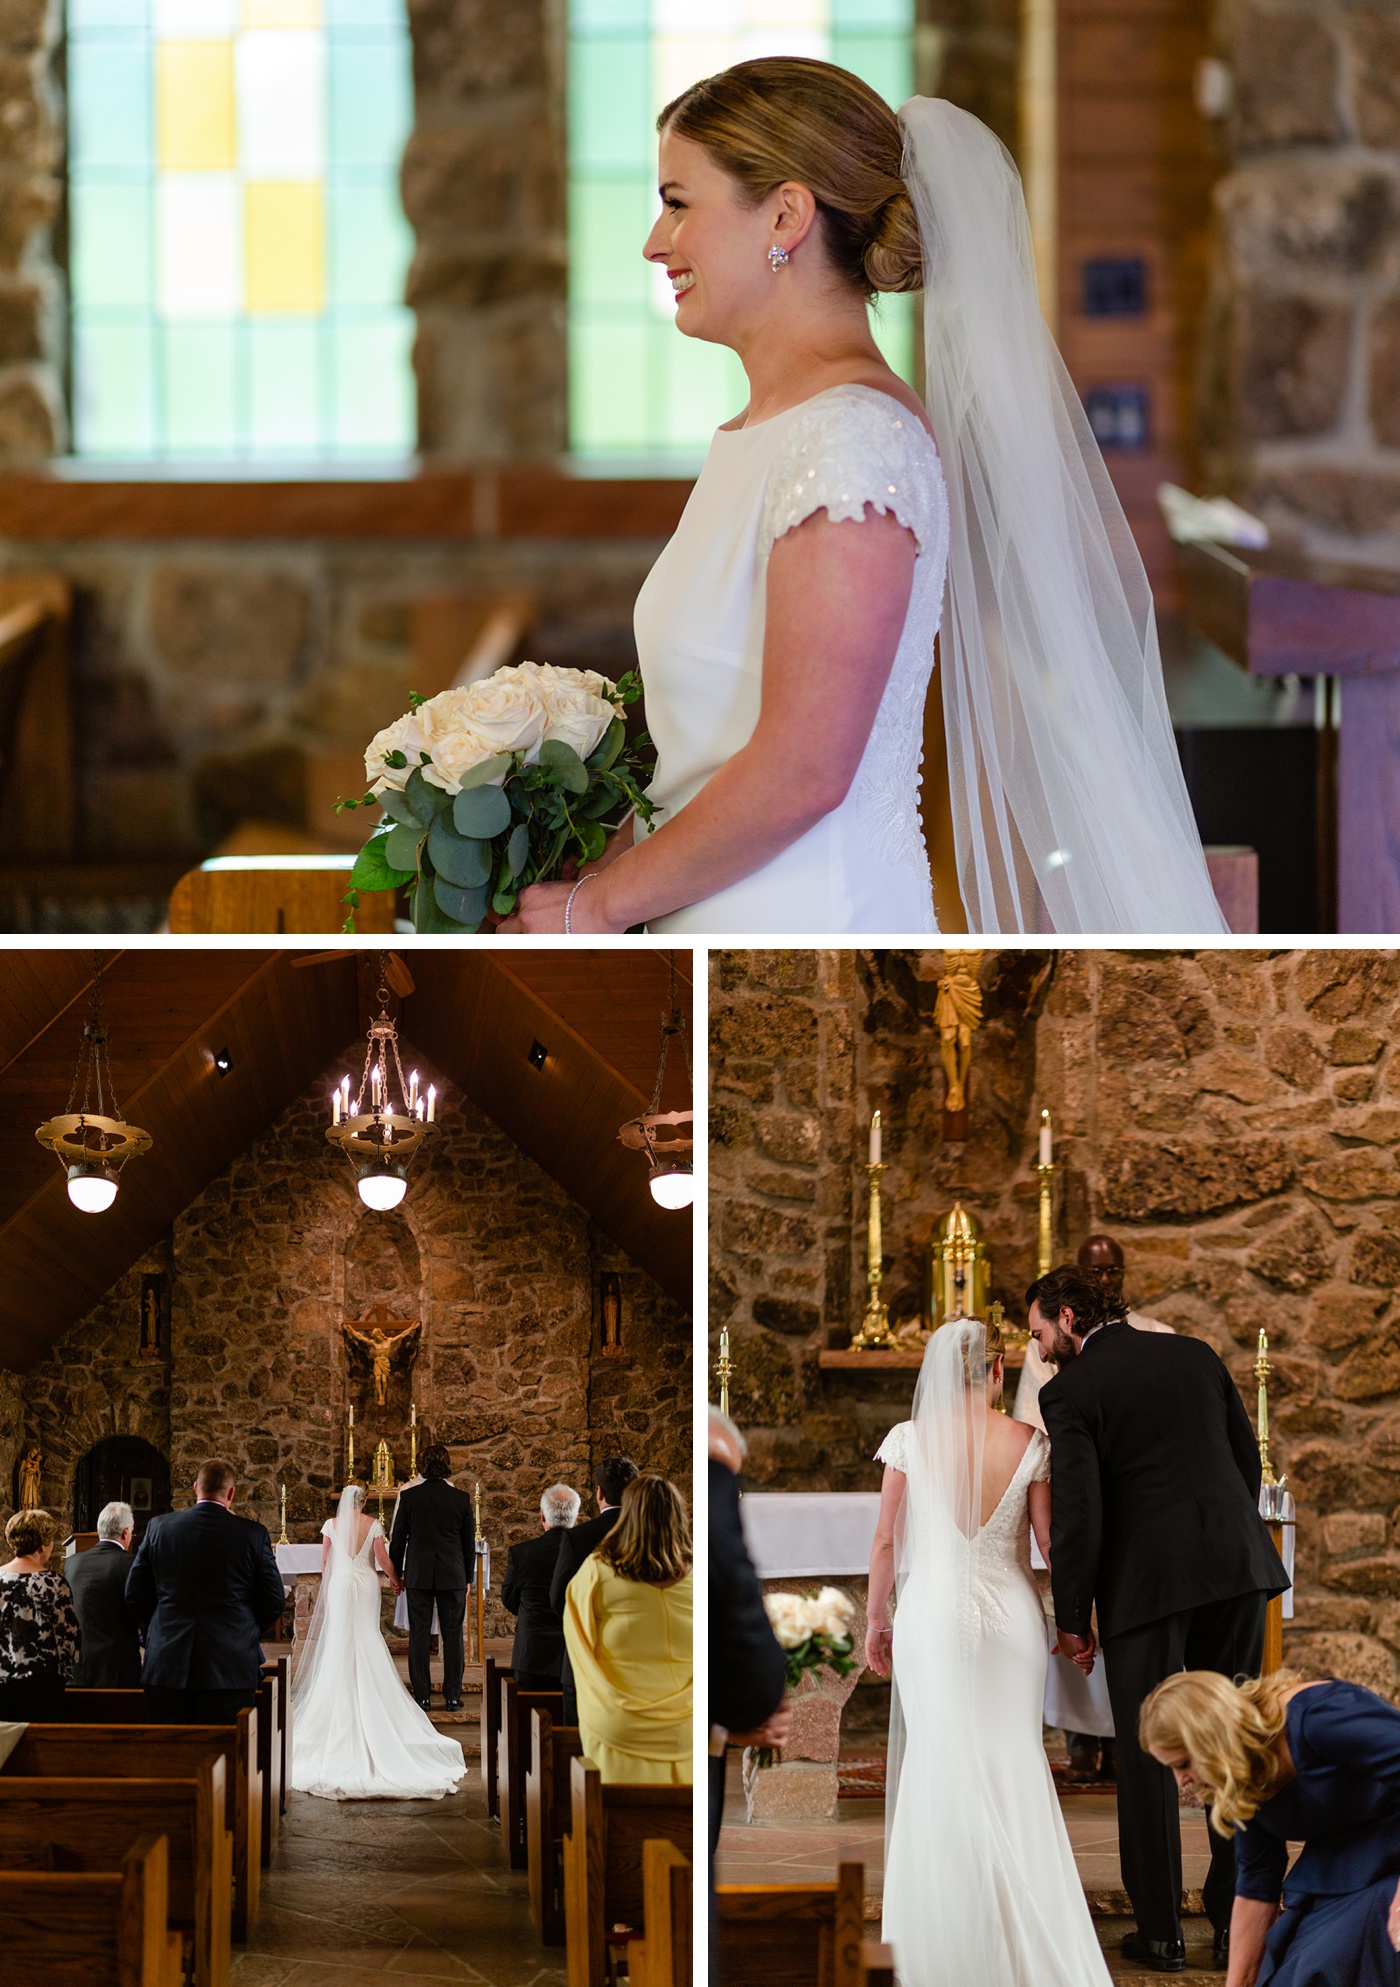 Intimate wedding ceremony in Estes Park